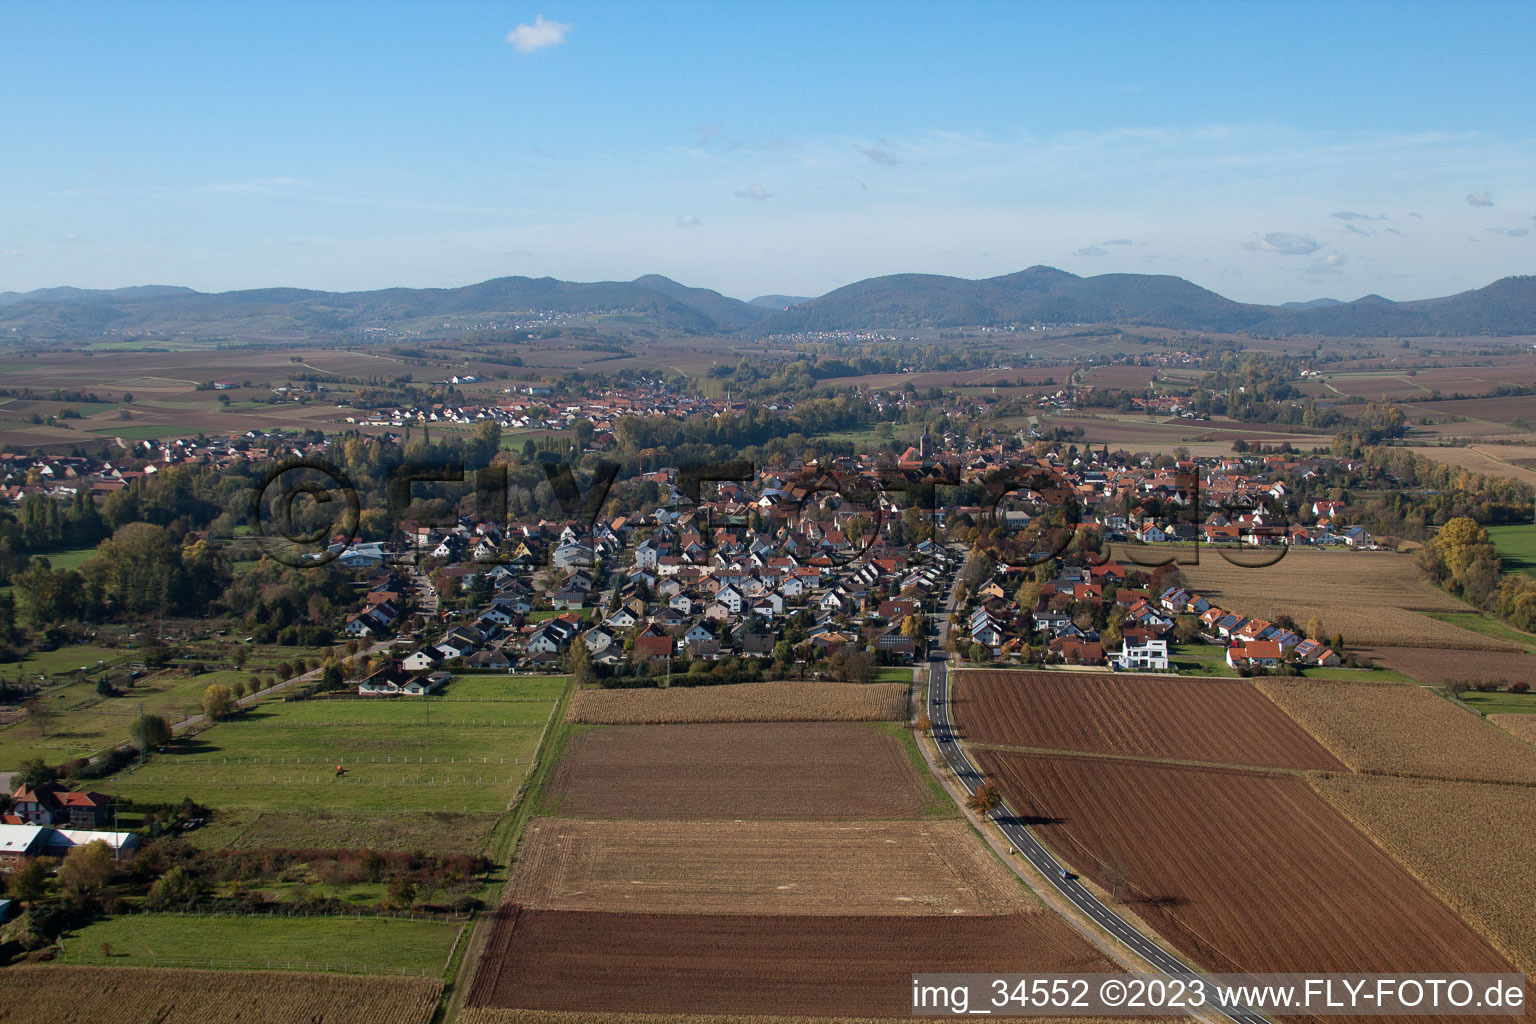 District Billigheim in Billigheim-Ingenheim in the state Rhineland-Palatinate, Germany viewn from the air